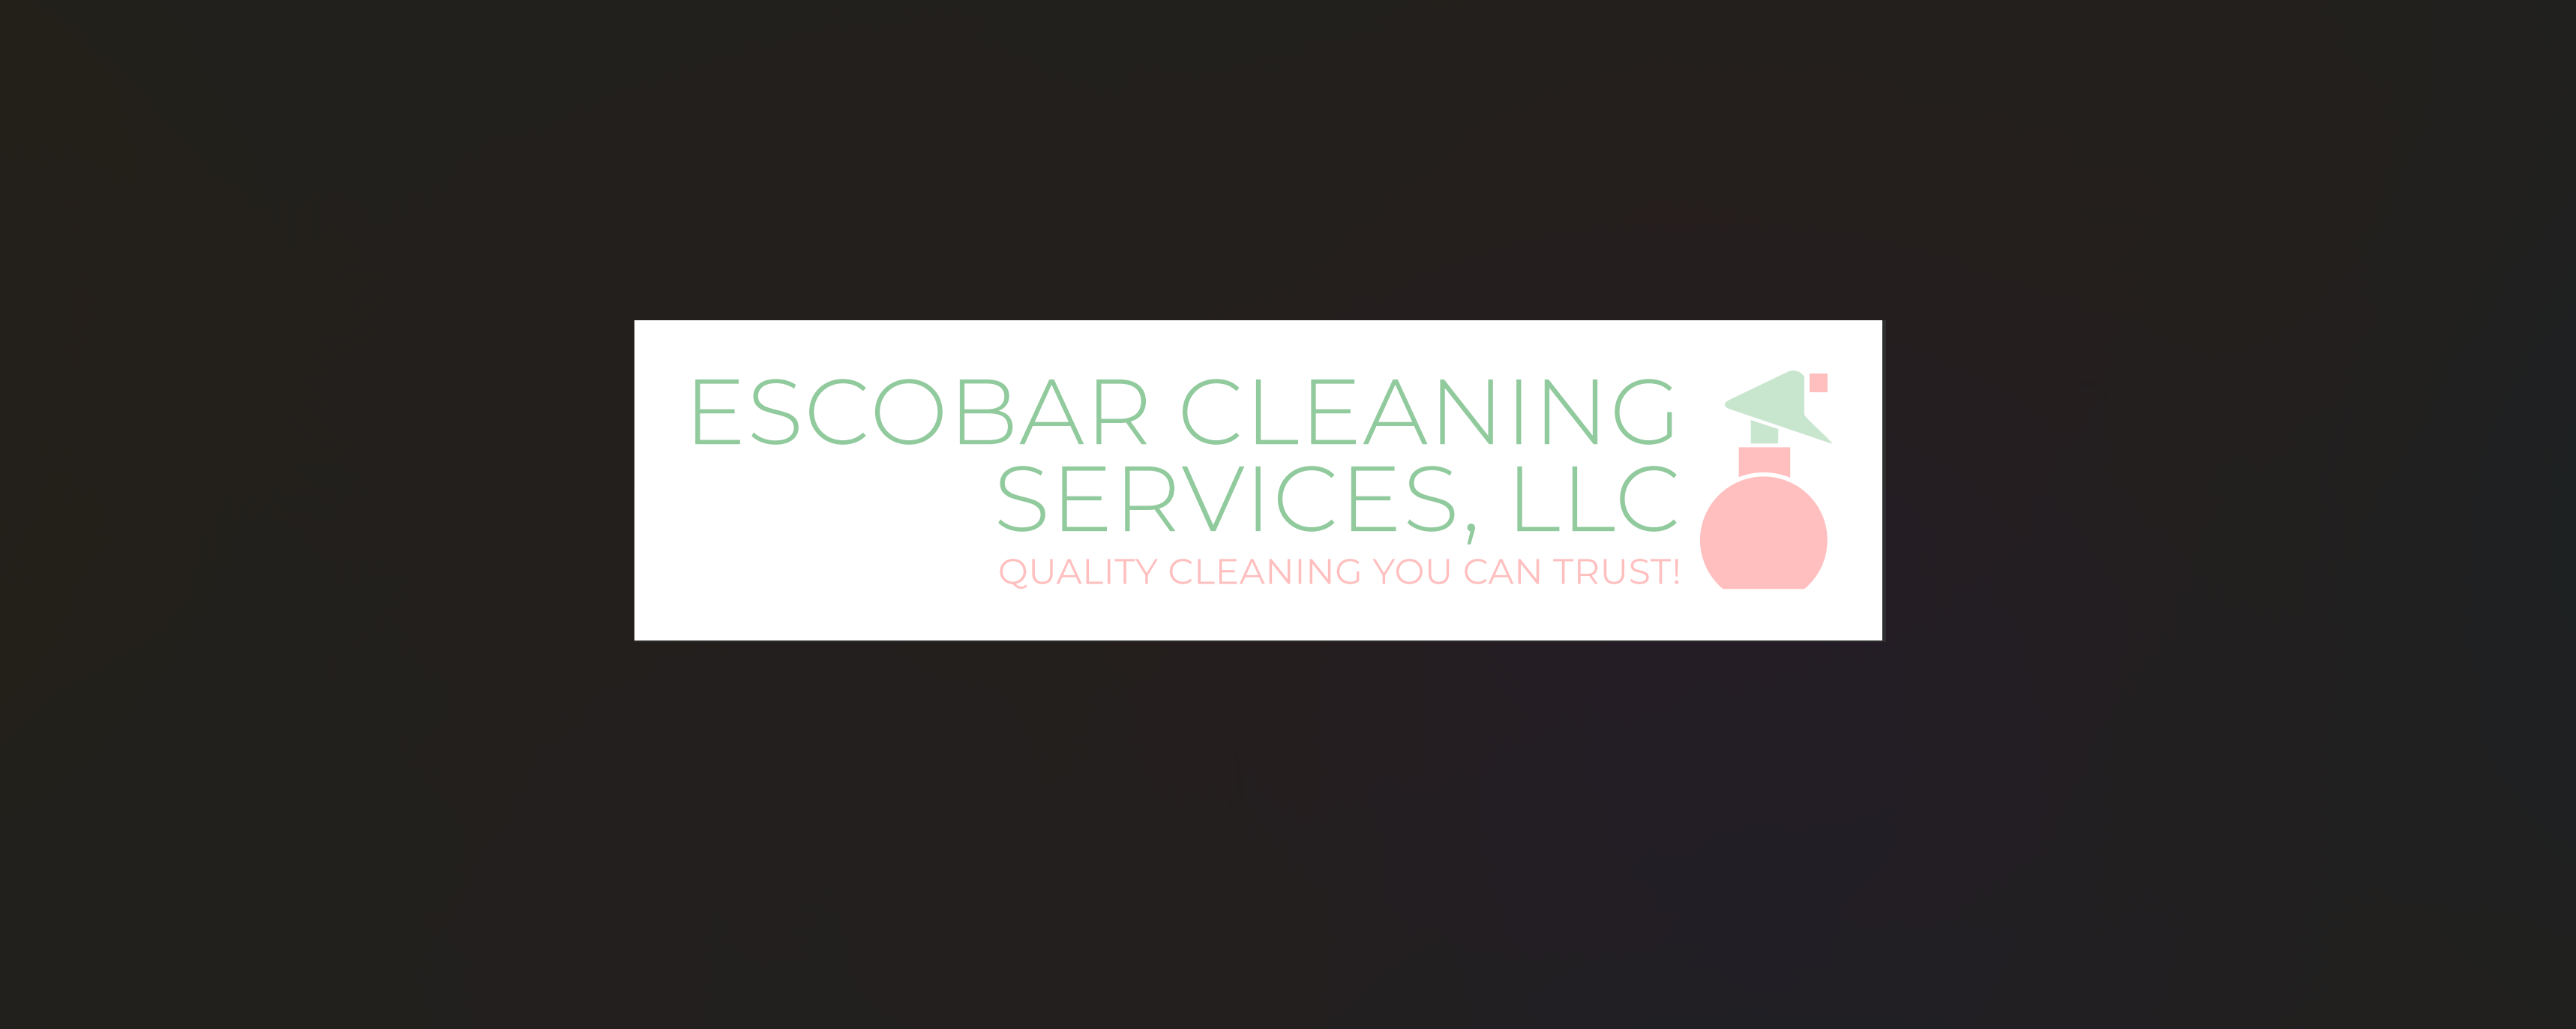 Escobar Cleaning Services, LLC Logo